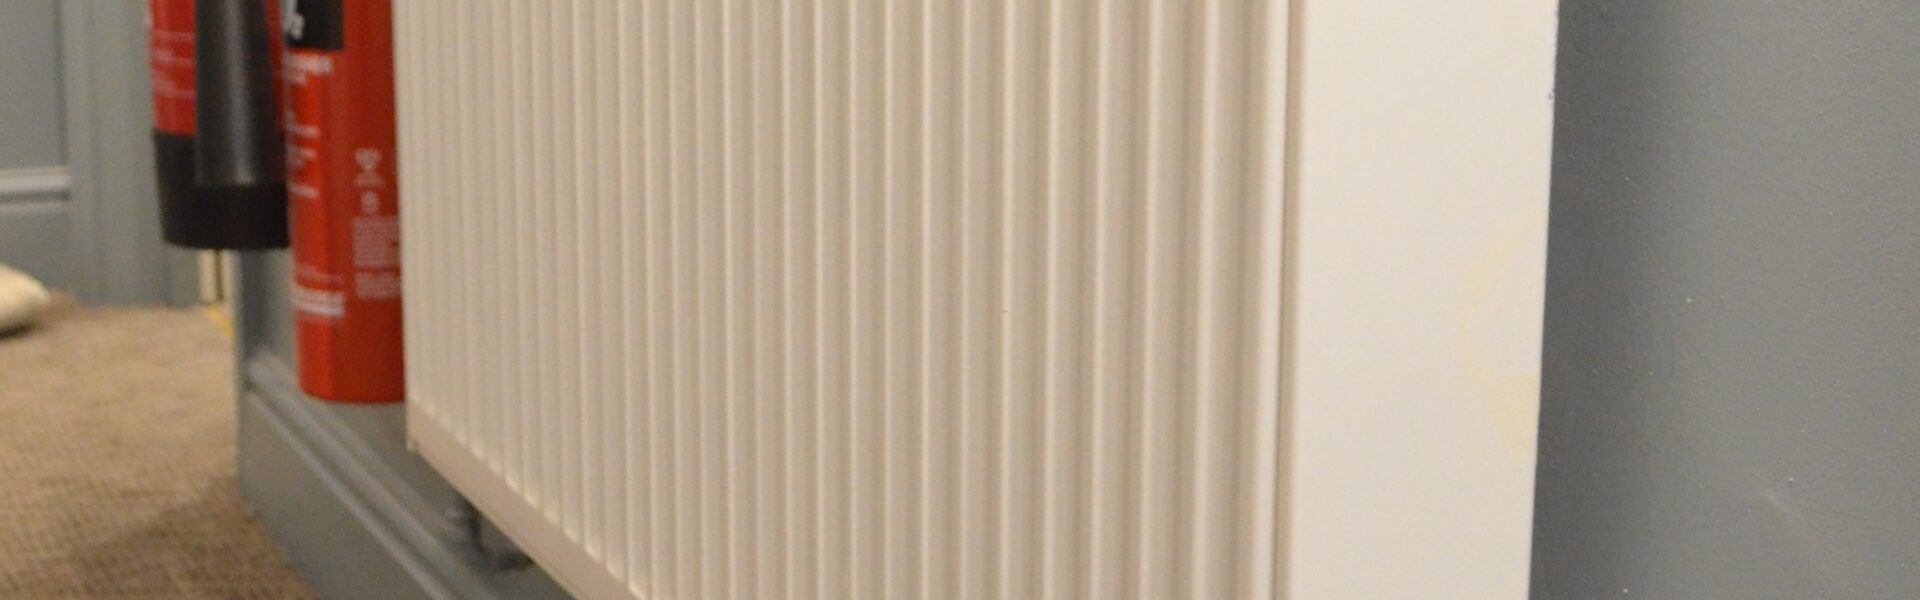 Lake District hotel selects Stelrad radiators for refurbishment project